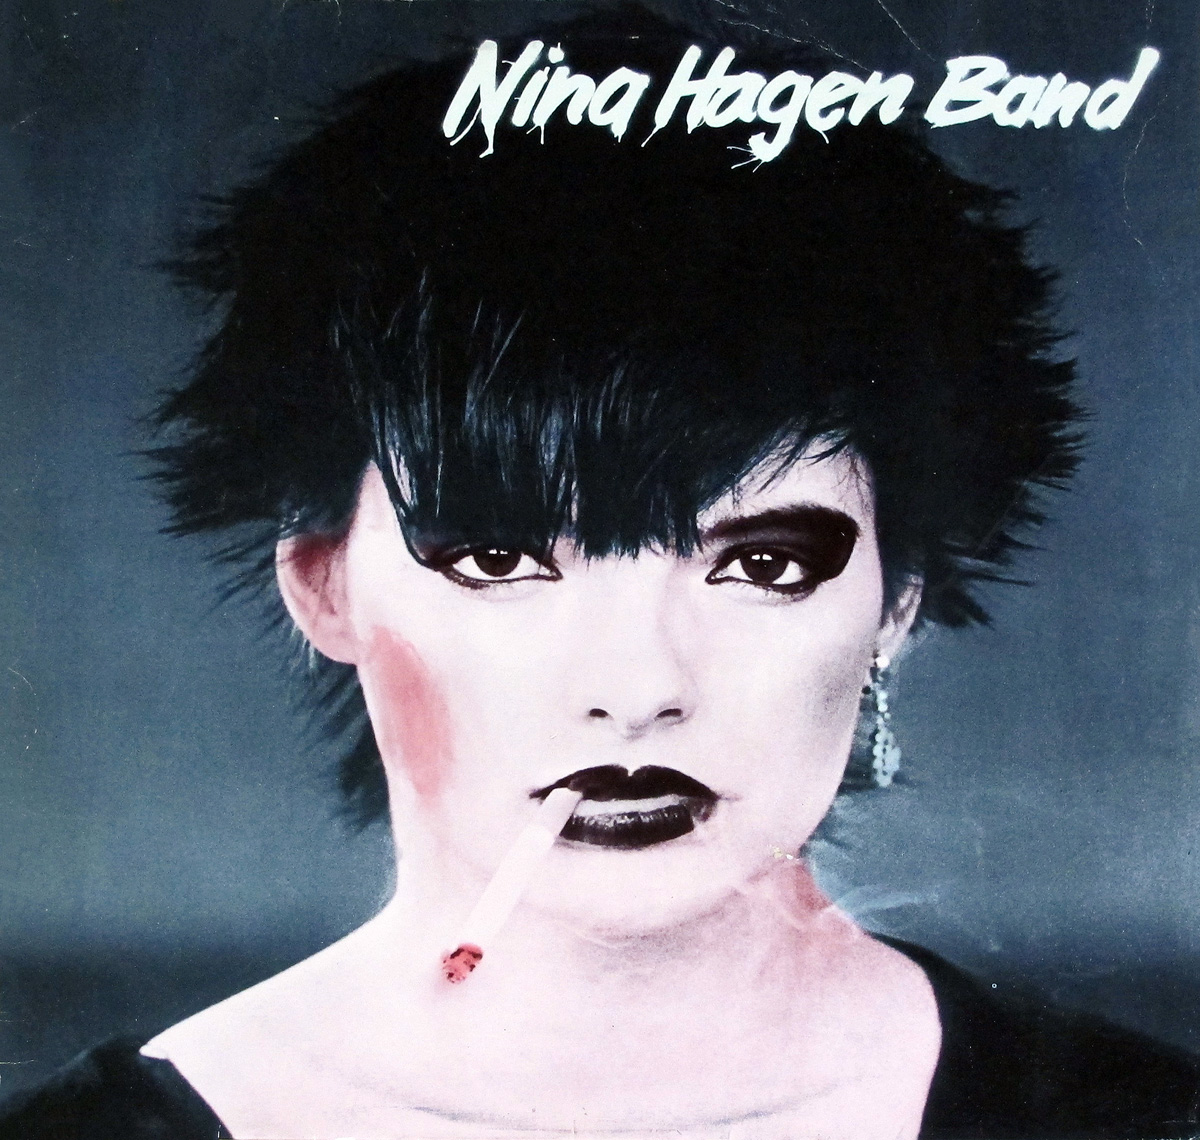 Album Front cover Photo of NINA HAGEN BAND - S/T Self-Titled 12" LP Vinyl Album https://vinyl-records.nl/